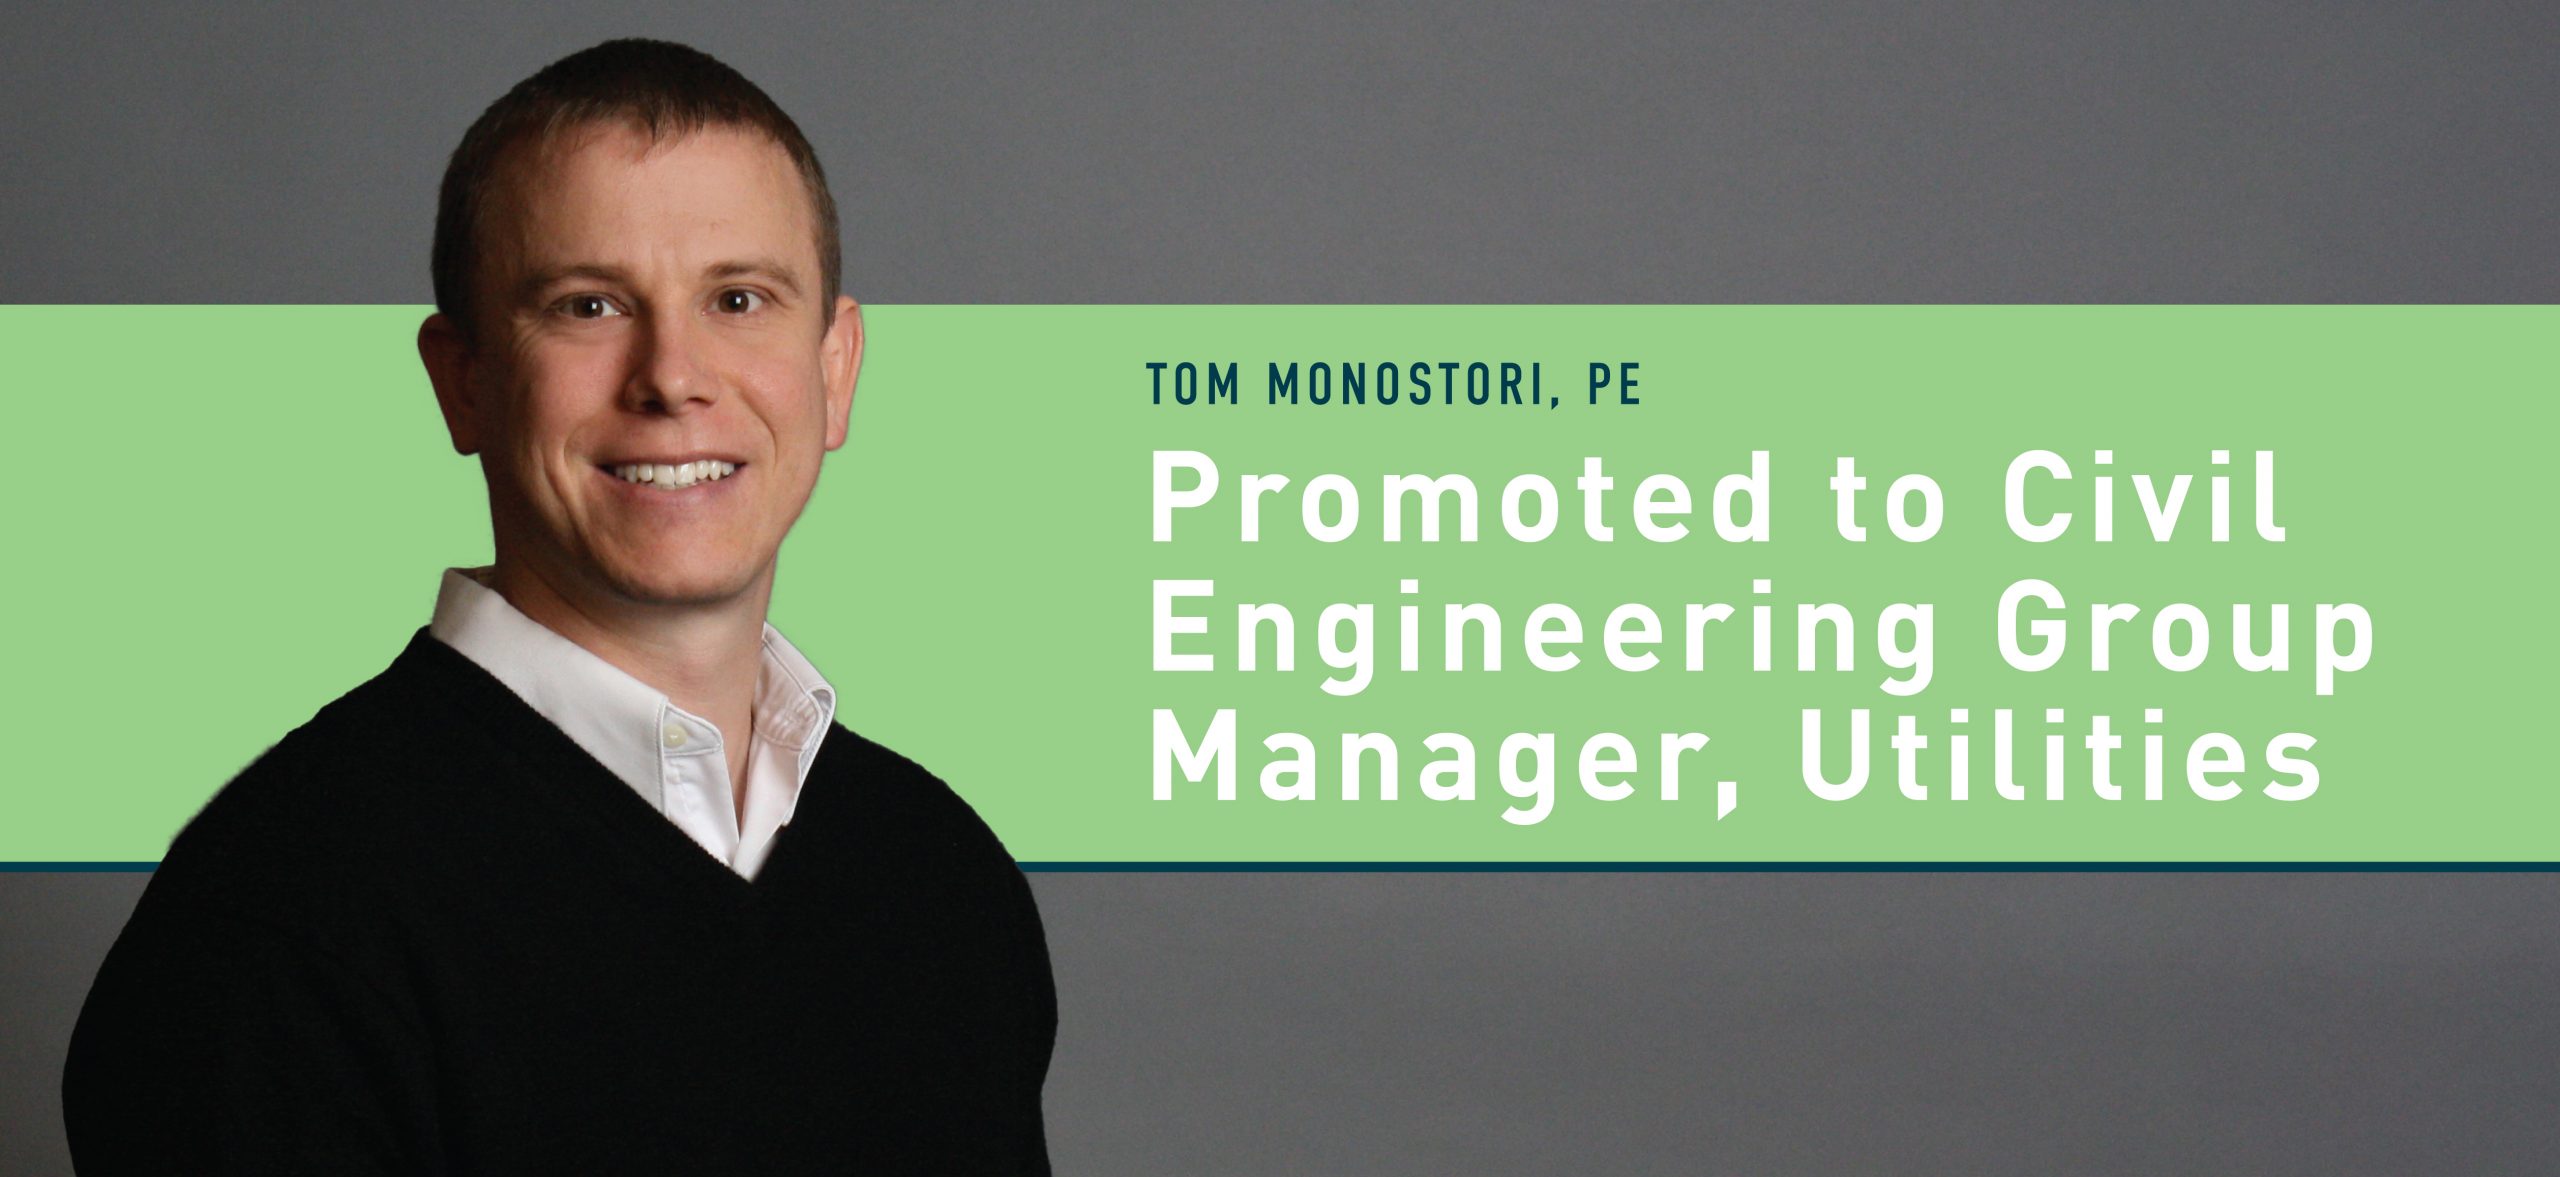 Tom Monostori, PE Promoted to Civil Engineering Group Manager, Utilities